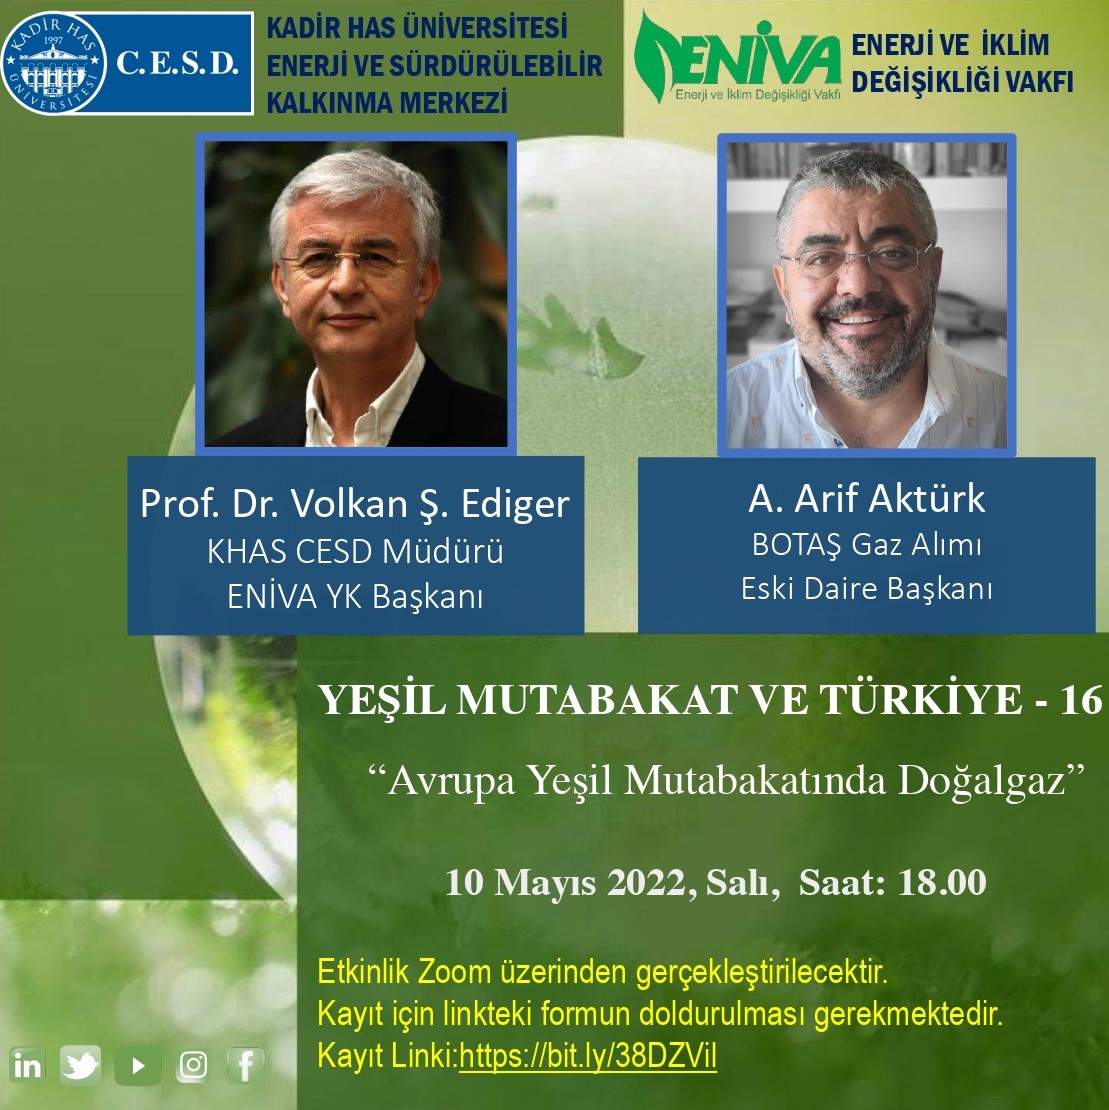 European Green Deal and Turkey-16: Ali Arif Aktürk